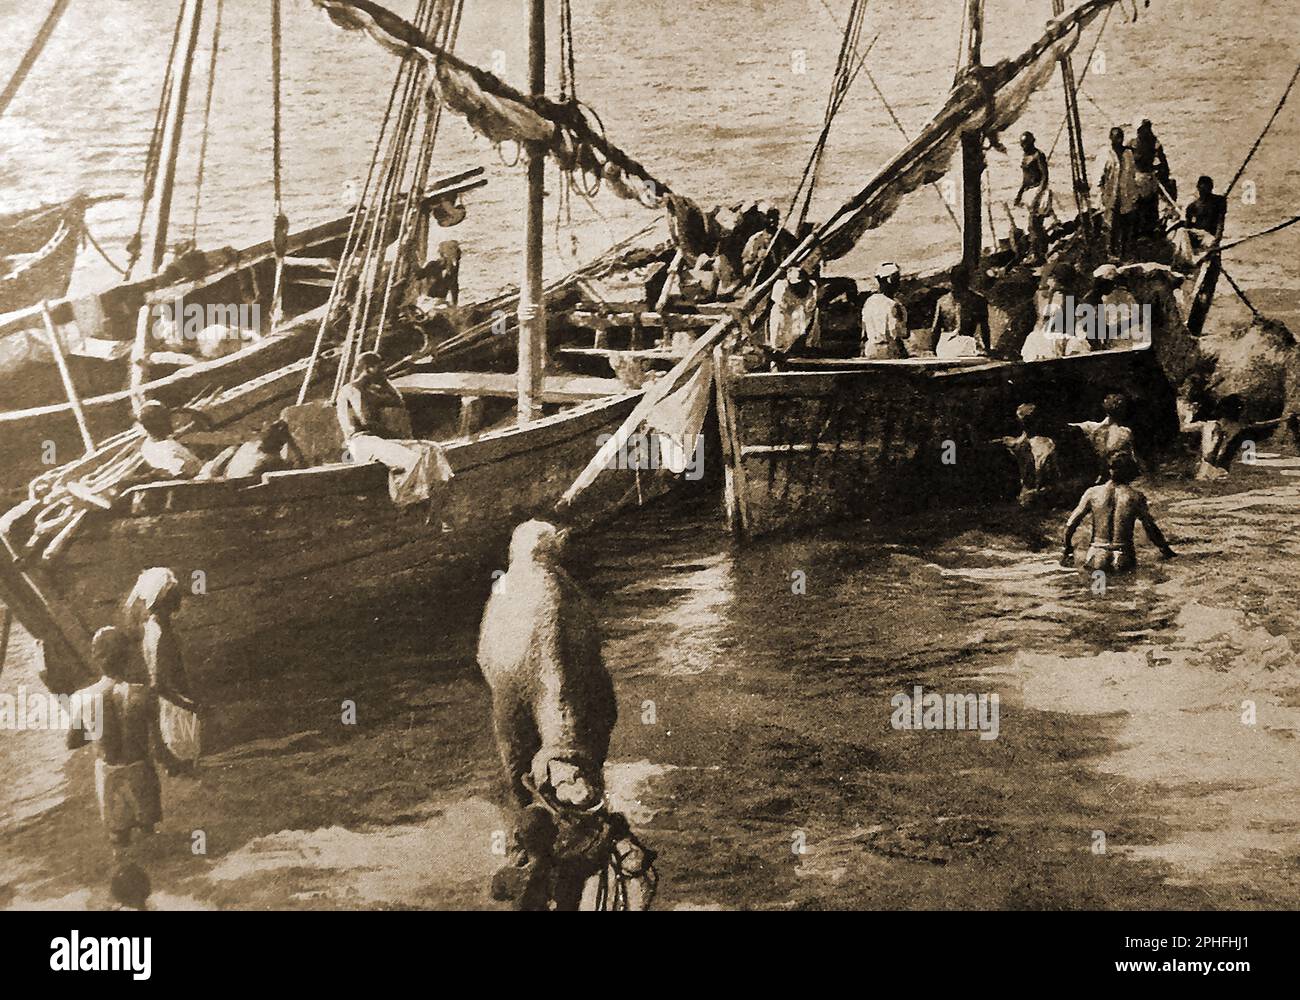 WWI - Indische Boote, die für Kamele verwendet werden, um in der Ostafrika-Kampagne in der Wüste eingesetzt zu werden. --- प्रथम विश्व युद्ध - पूर्वी अफ्रीका अभियान में रेगिस्तानी संचालन के लिए इस्तेमाल किए जाने वाले ऊंटों को ले जाने के लिए भारतीय नौकाओं का उपयोग किया जा रहा है। -- پہلی جنگ عظیم - مشرقی افریقہ کی مہم میں صحرائی کارروائیوں کے لئے اونٹ لے جانے کے لئے ہندوستانی کشتیوں کا استعمال کیا جا رہا ہے۔ --- Stockfoto